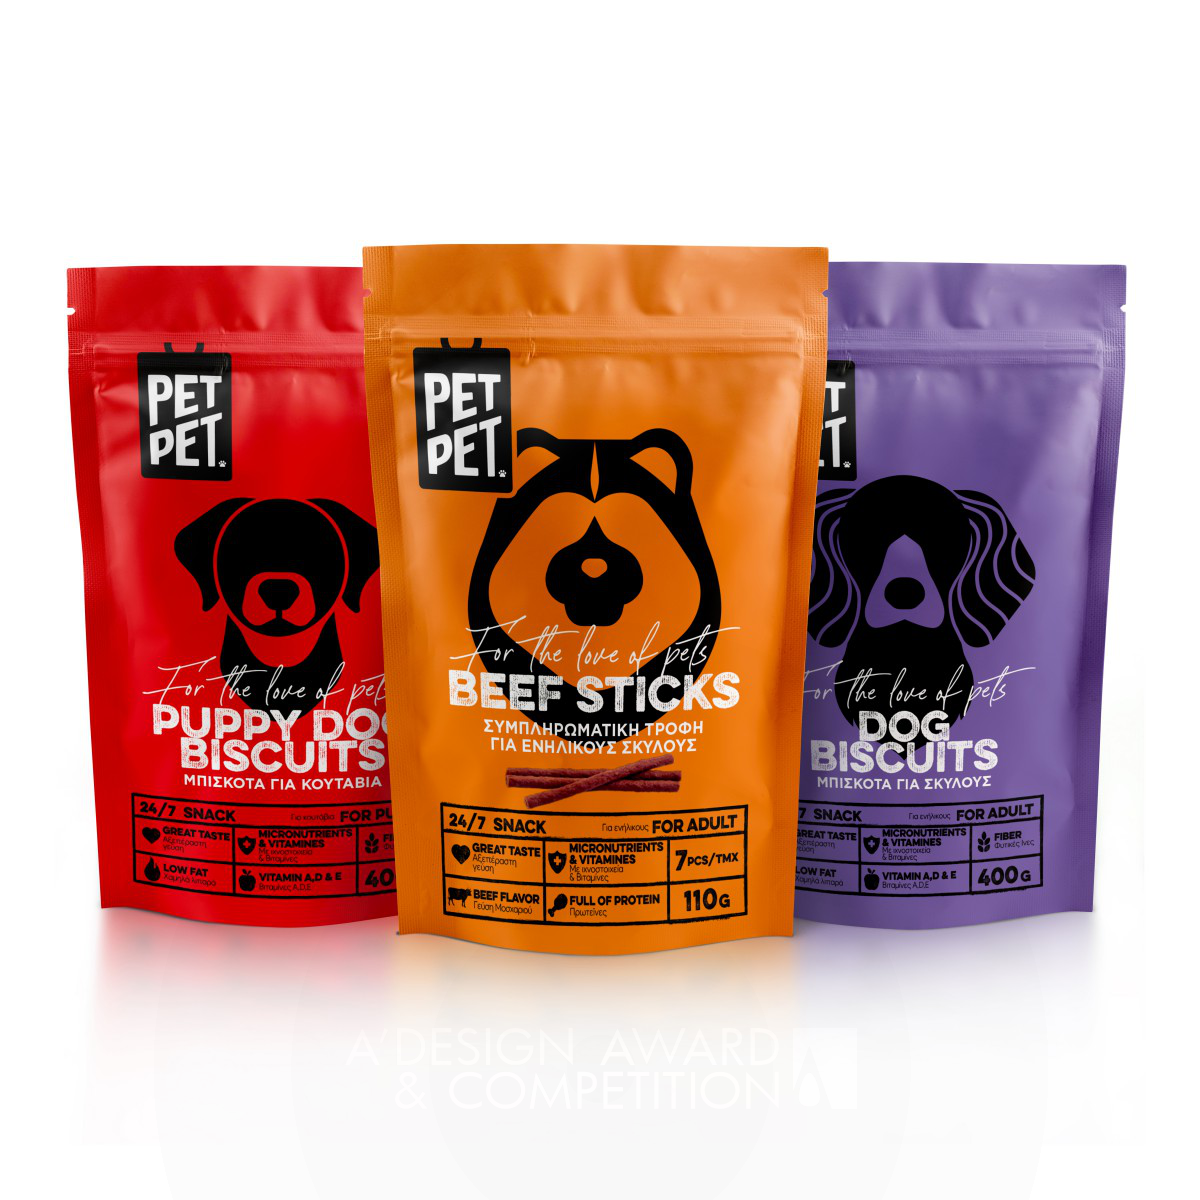 Pet Pet Brand Products by Antonia Skaraki